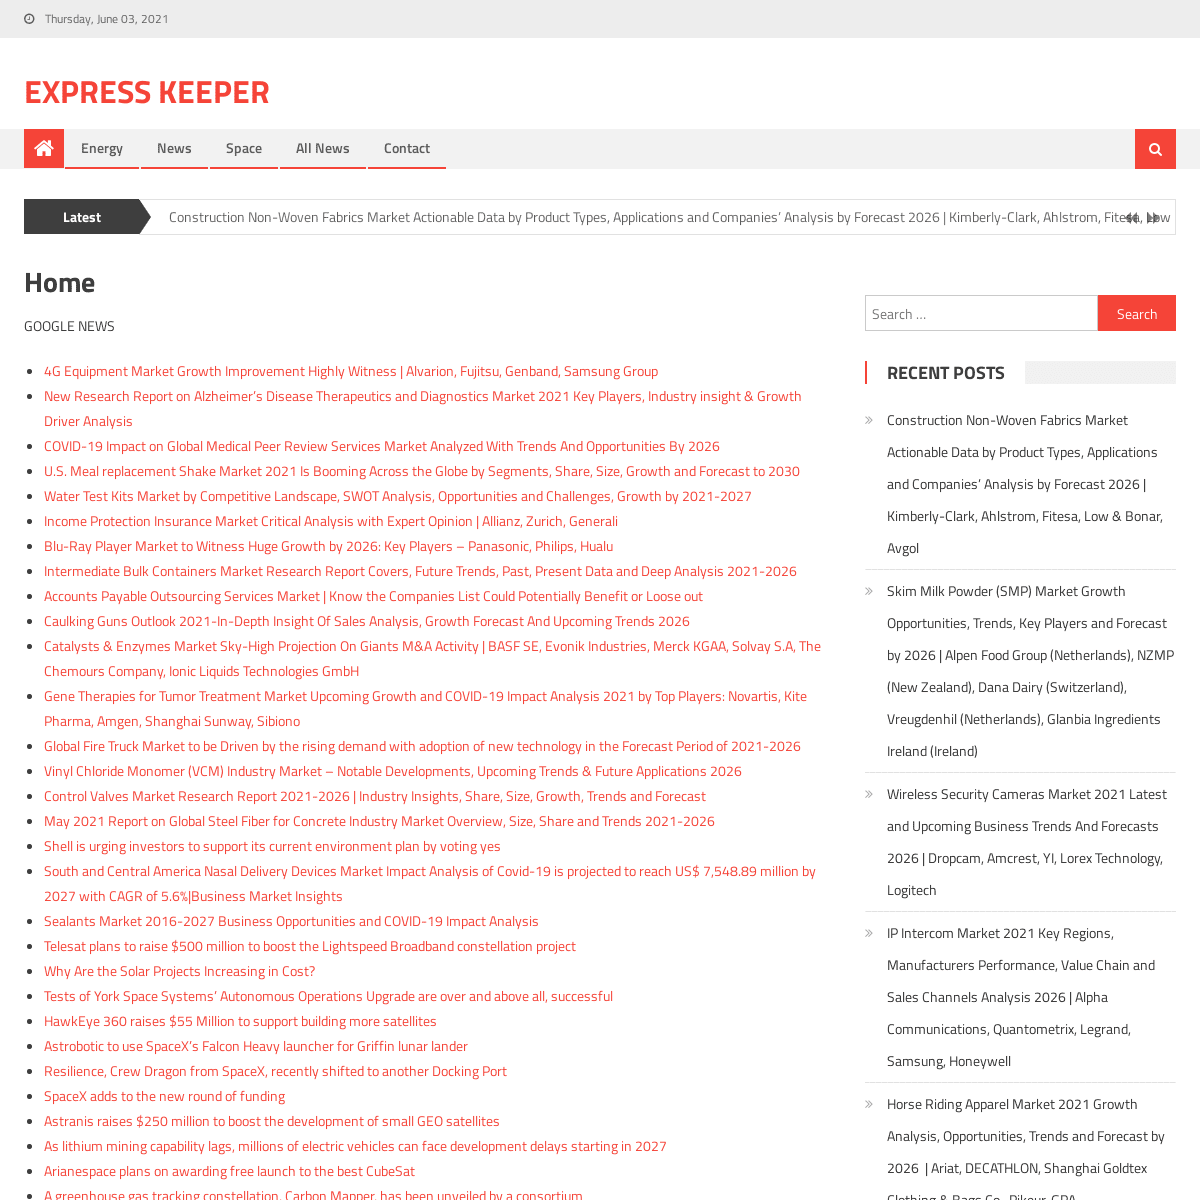 A complete backup of https://expresskeeper.com